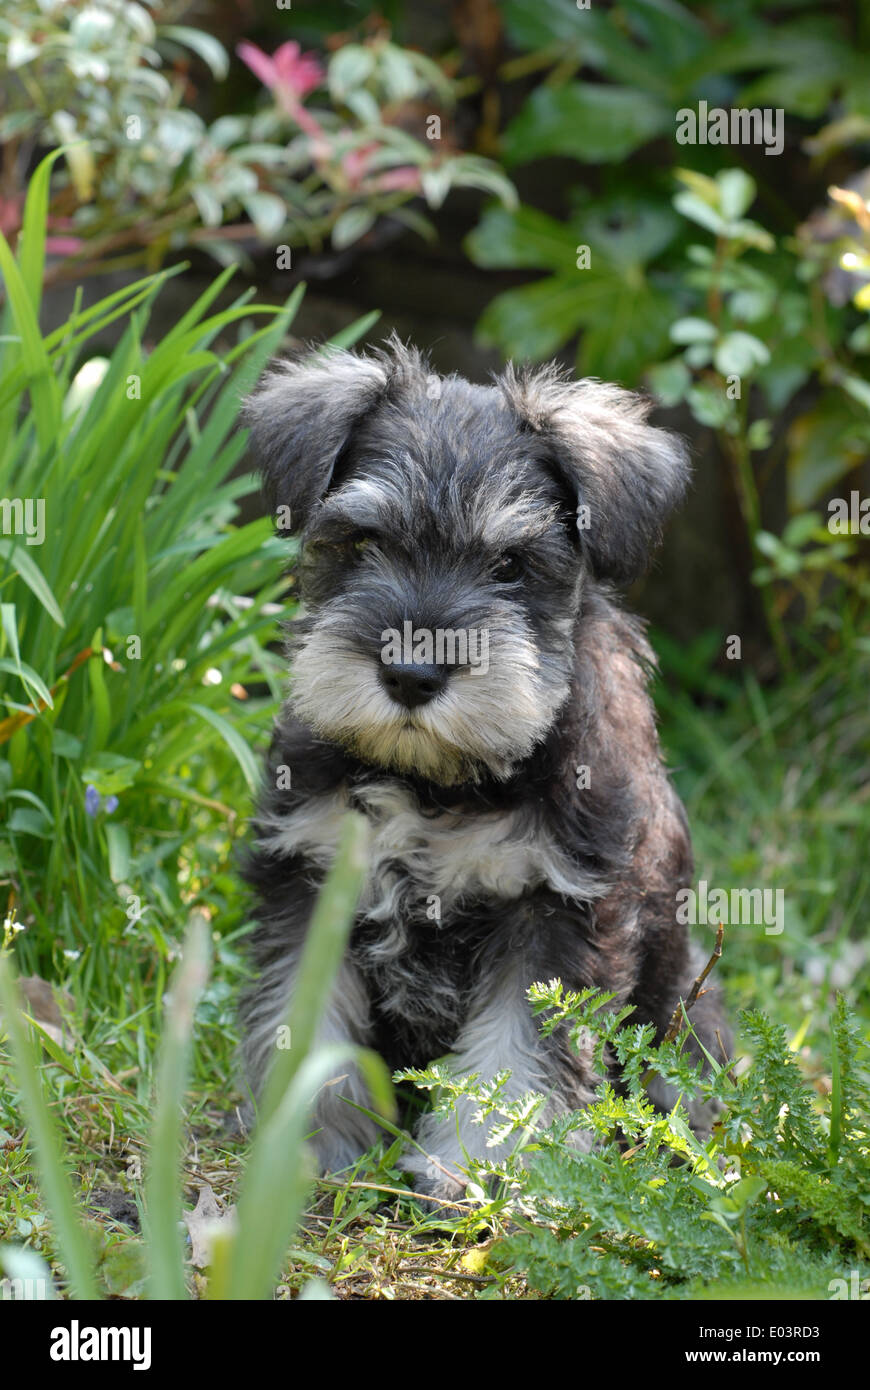 Miniature schauzer puppy Stock Photo